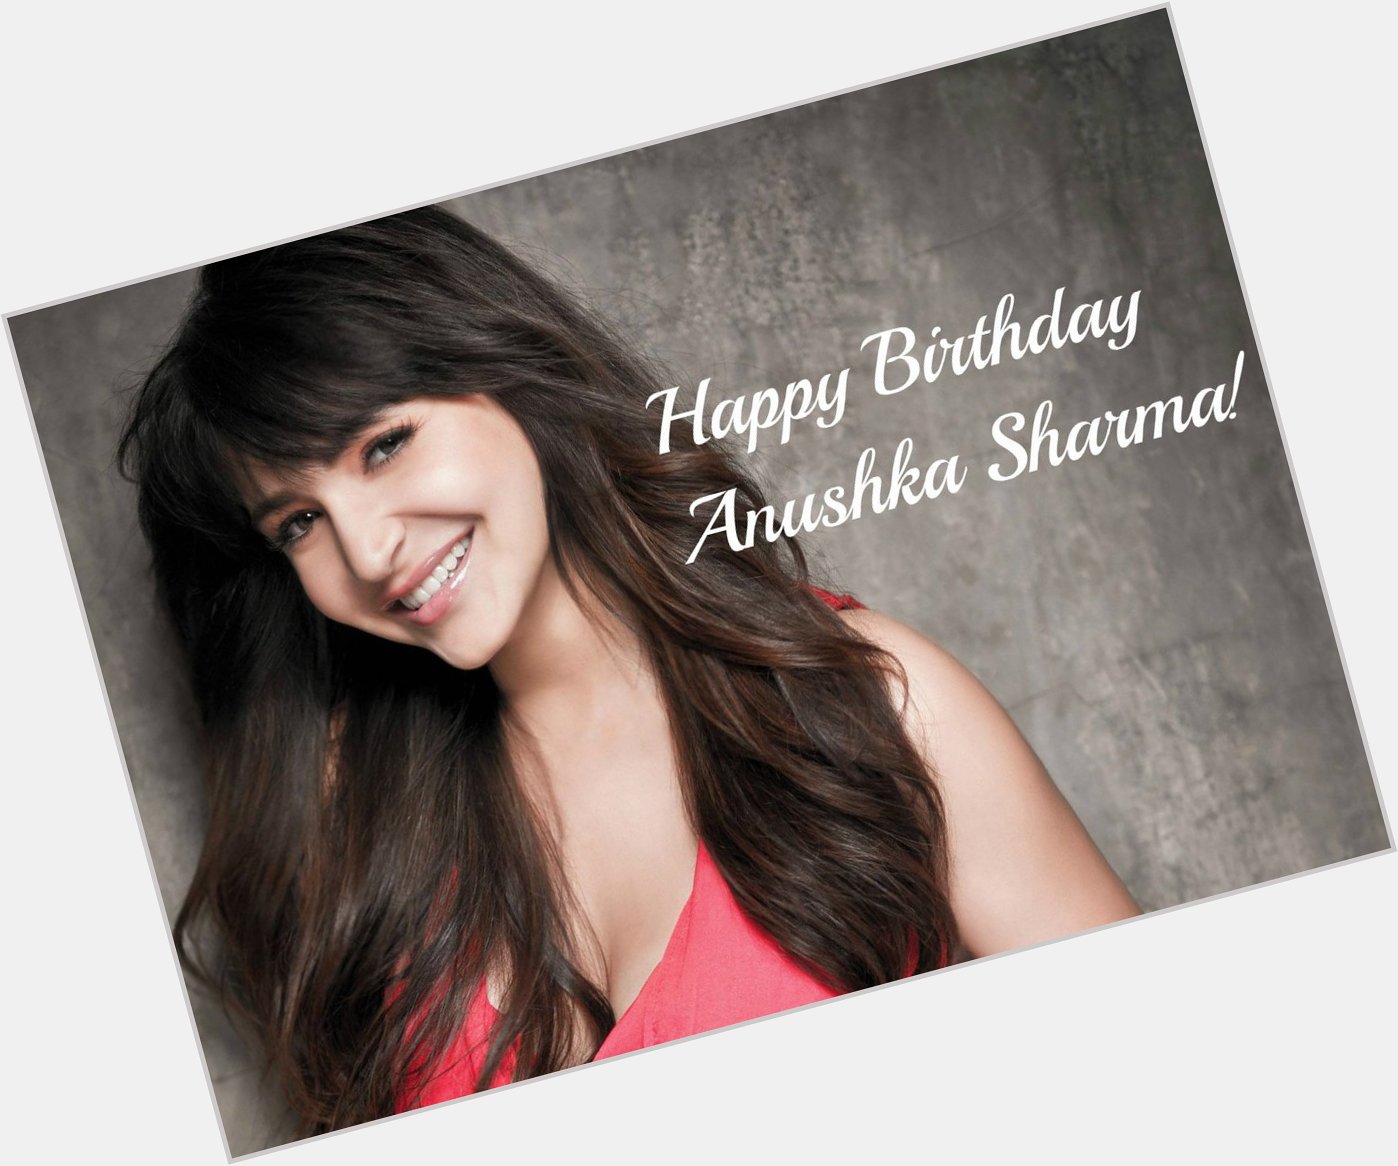 Here\s wishing the beautiful Anushka Sharma, a very happy birthday! May you shine higher than ever. 